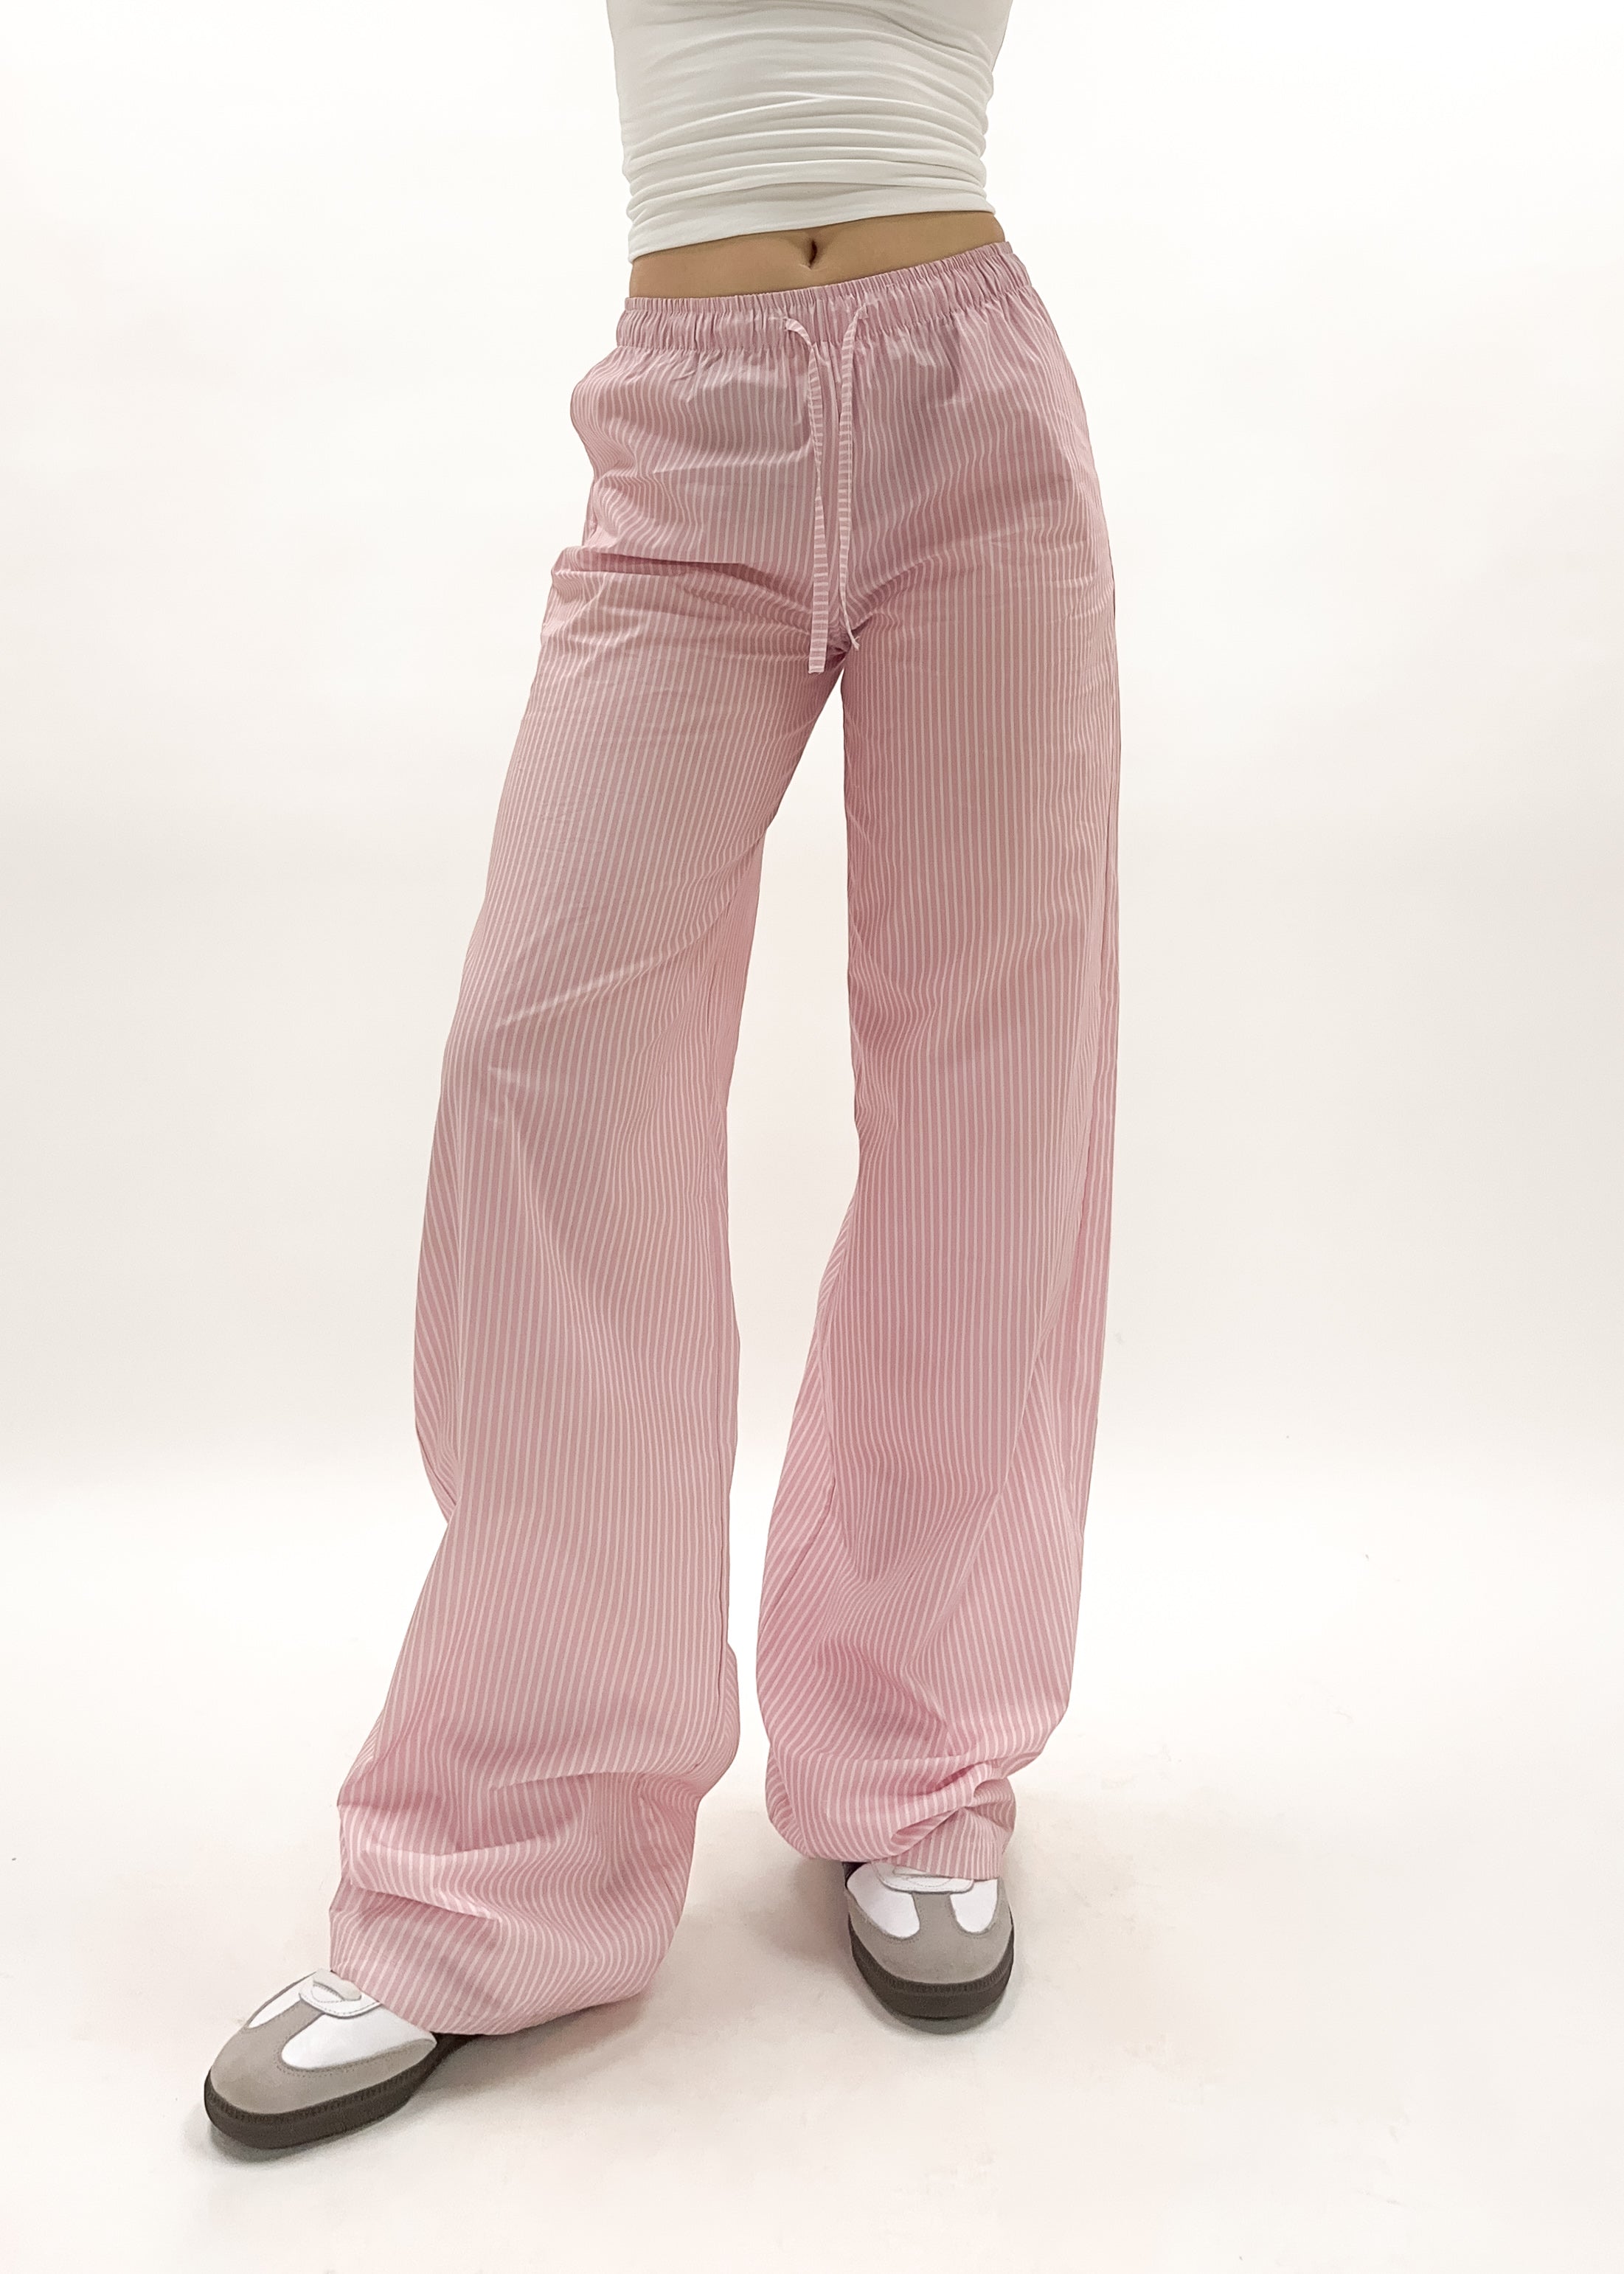 Cotton pants striped (TALL) pink/white